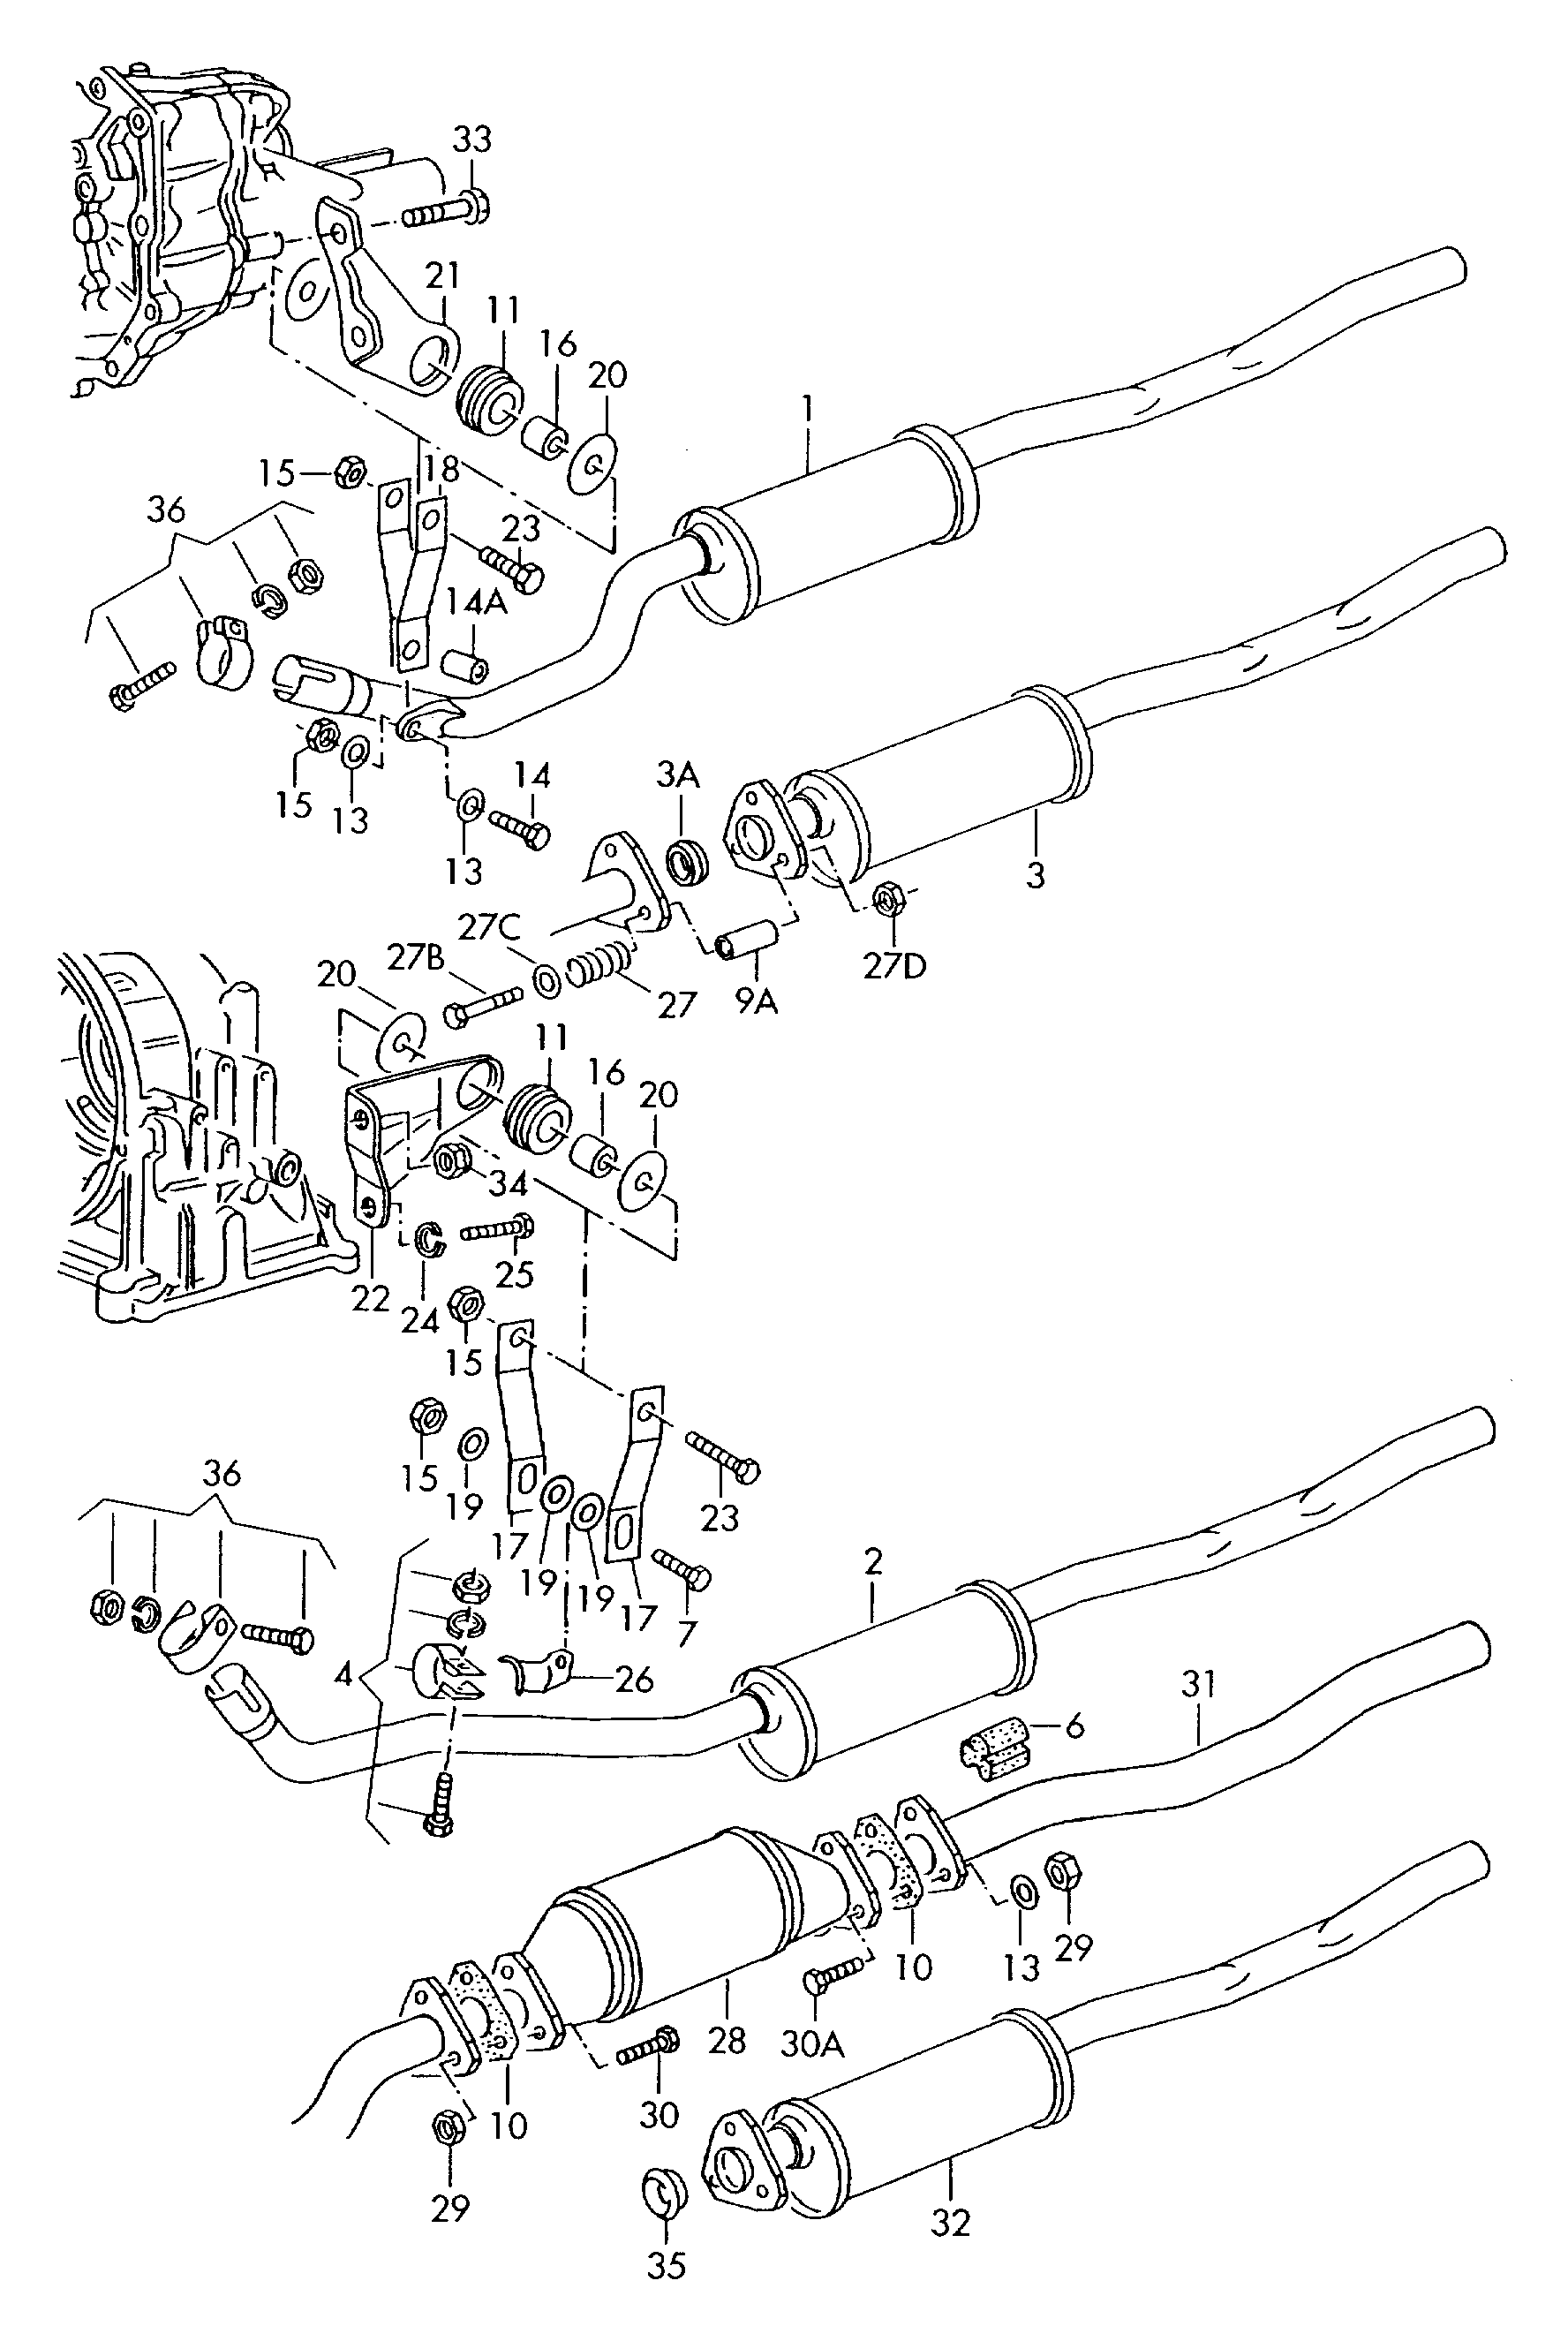 Intermediate pipeCatalytic converterFront silencer rear - Audi 4000 - a40